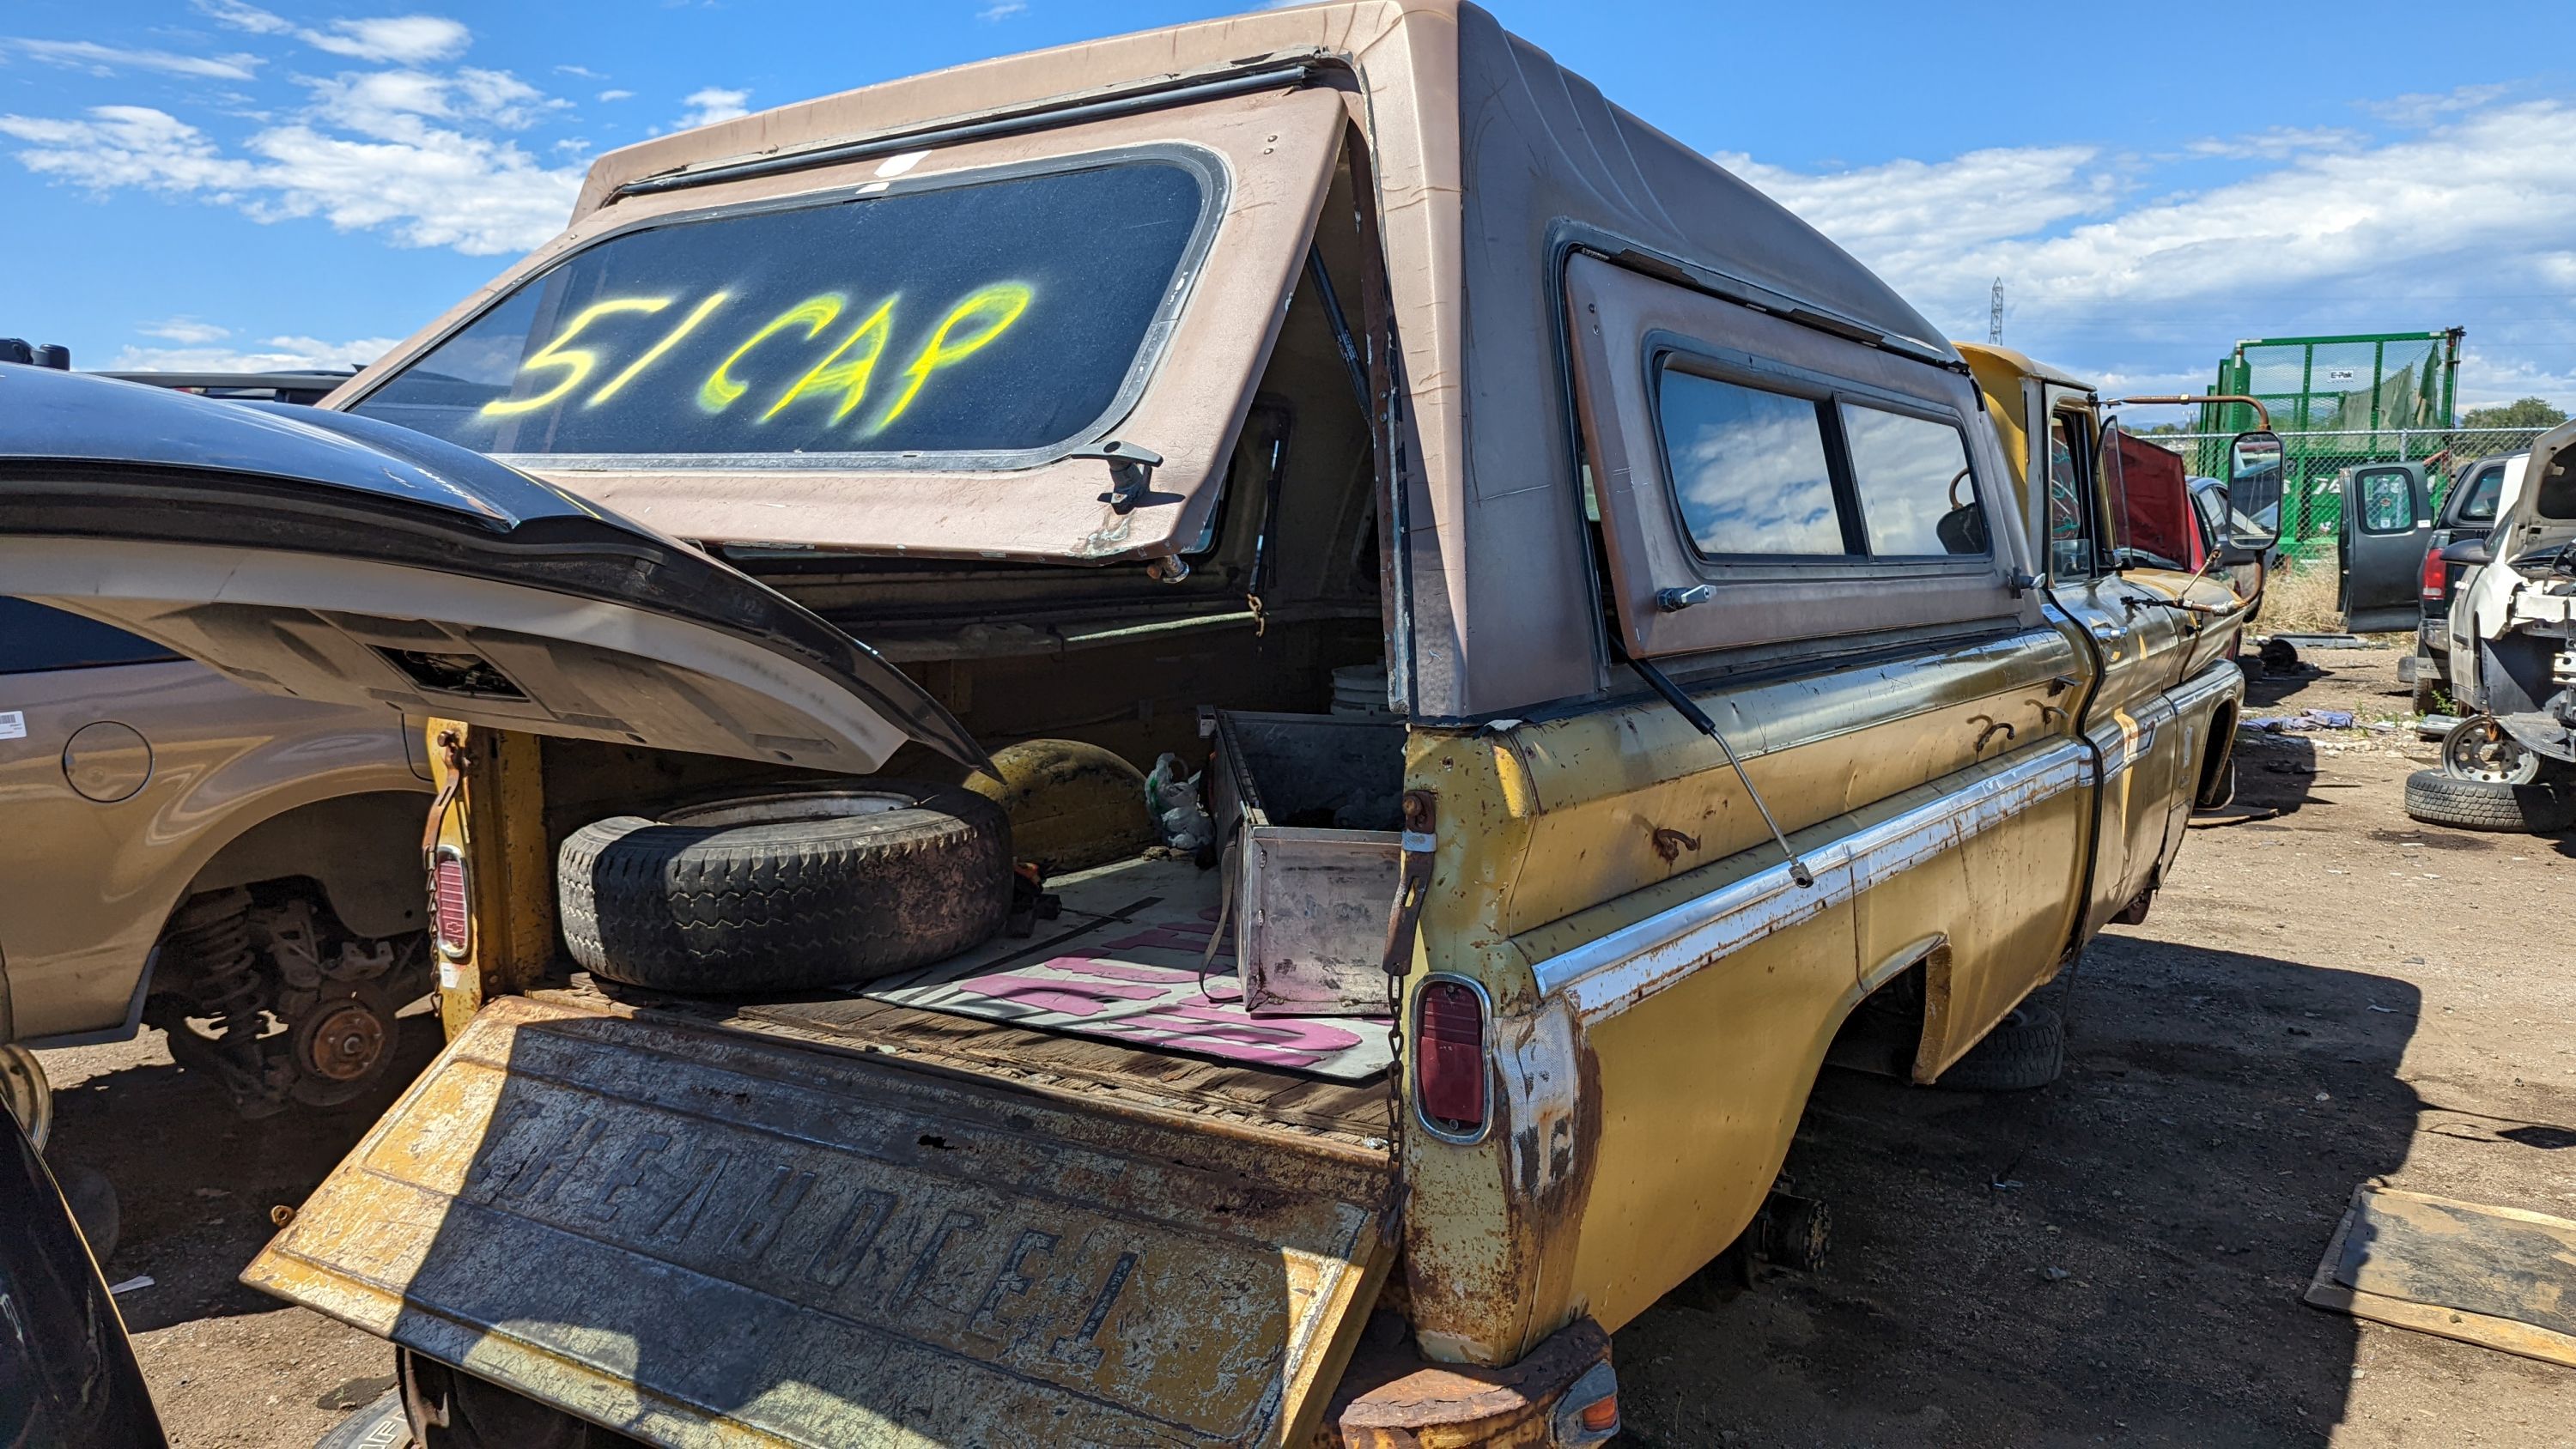 63 - 1964 Chevrolet C20 Pickup in Colorado junkyard - Photo by Murilee Martin